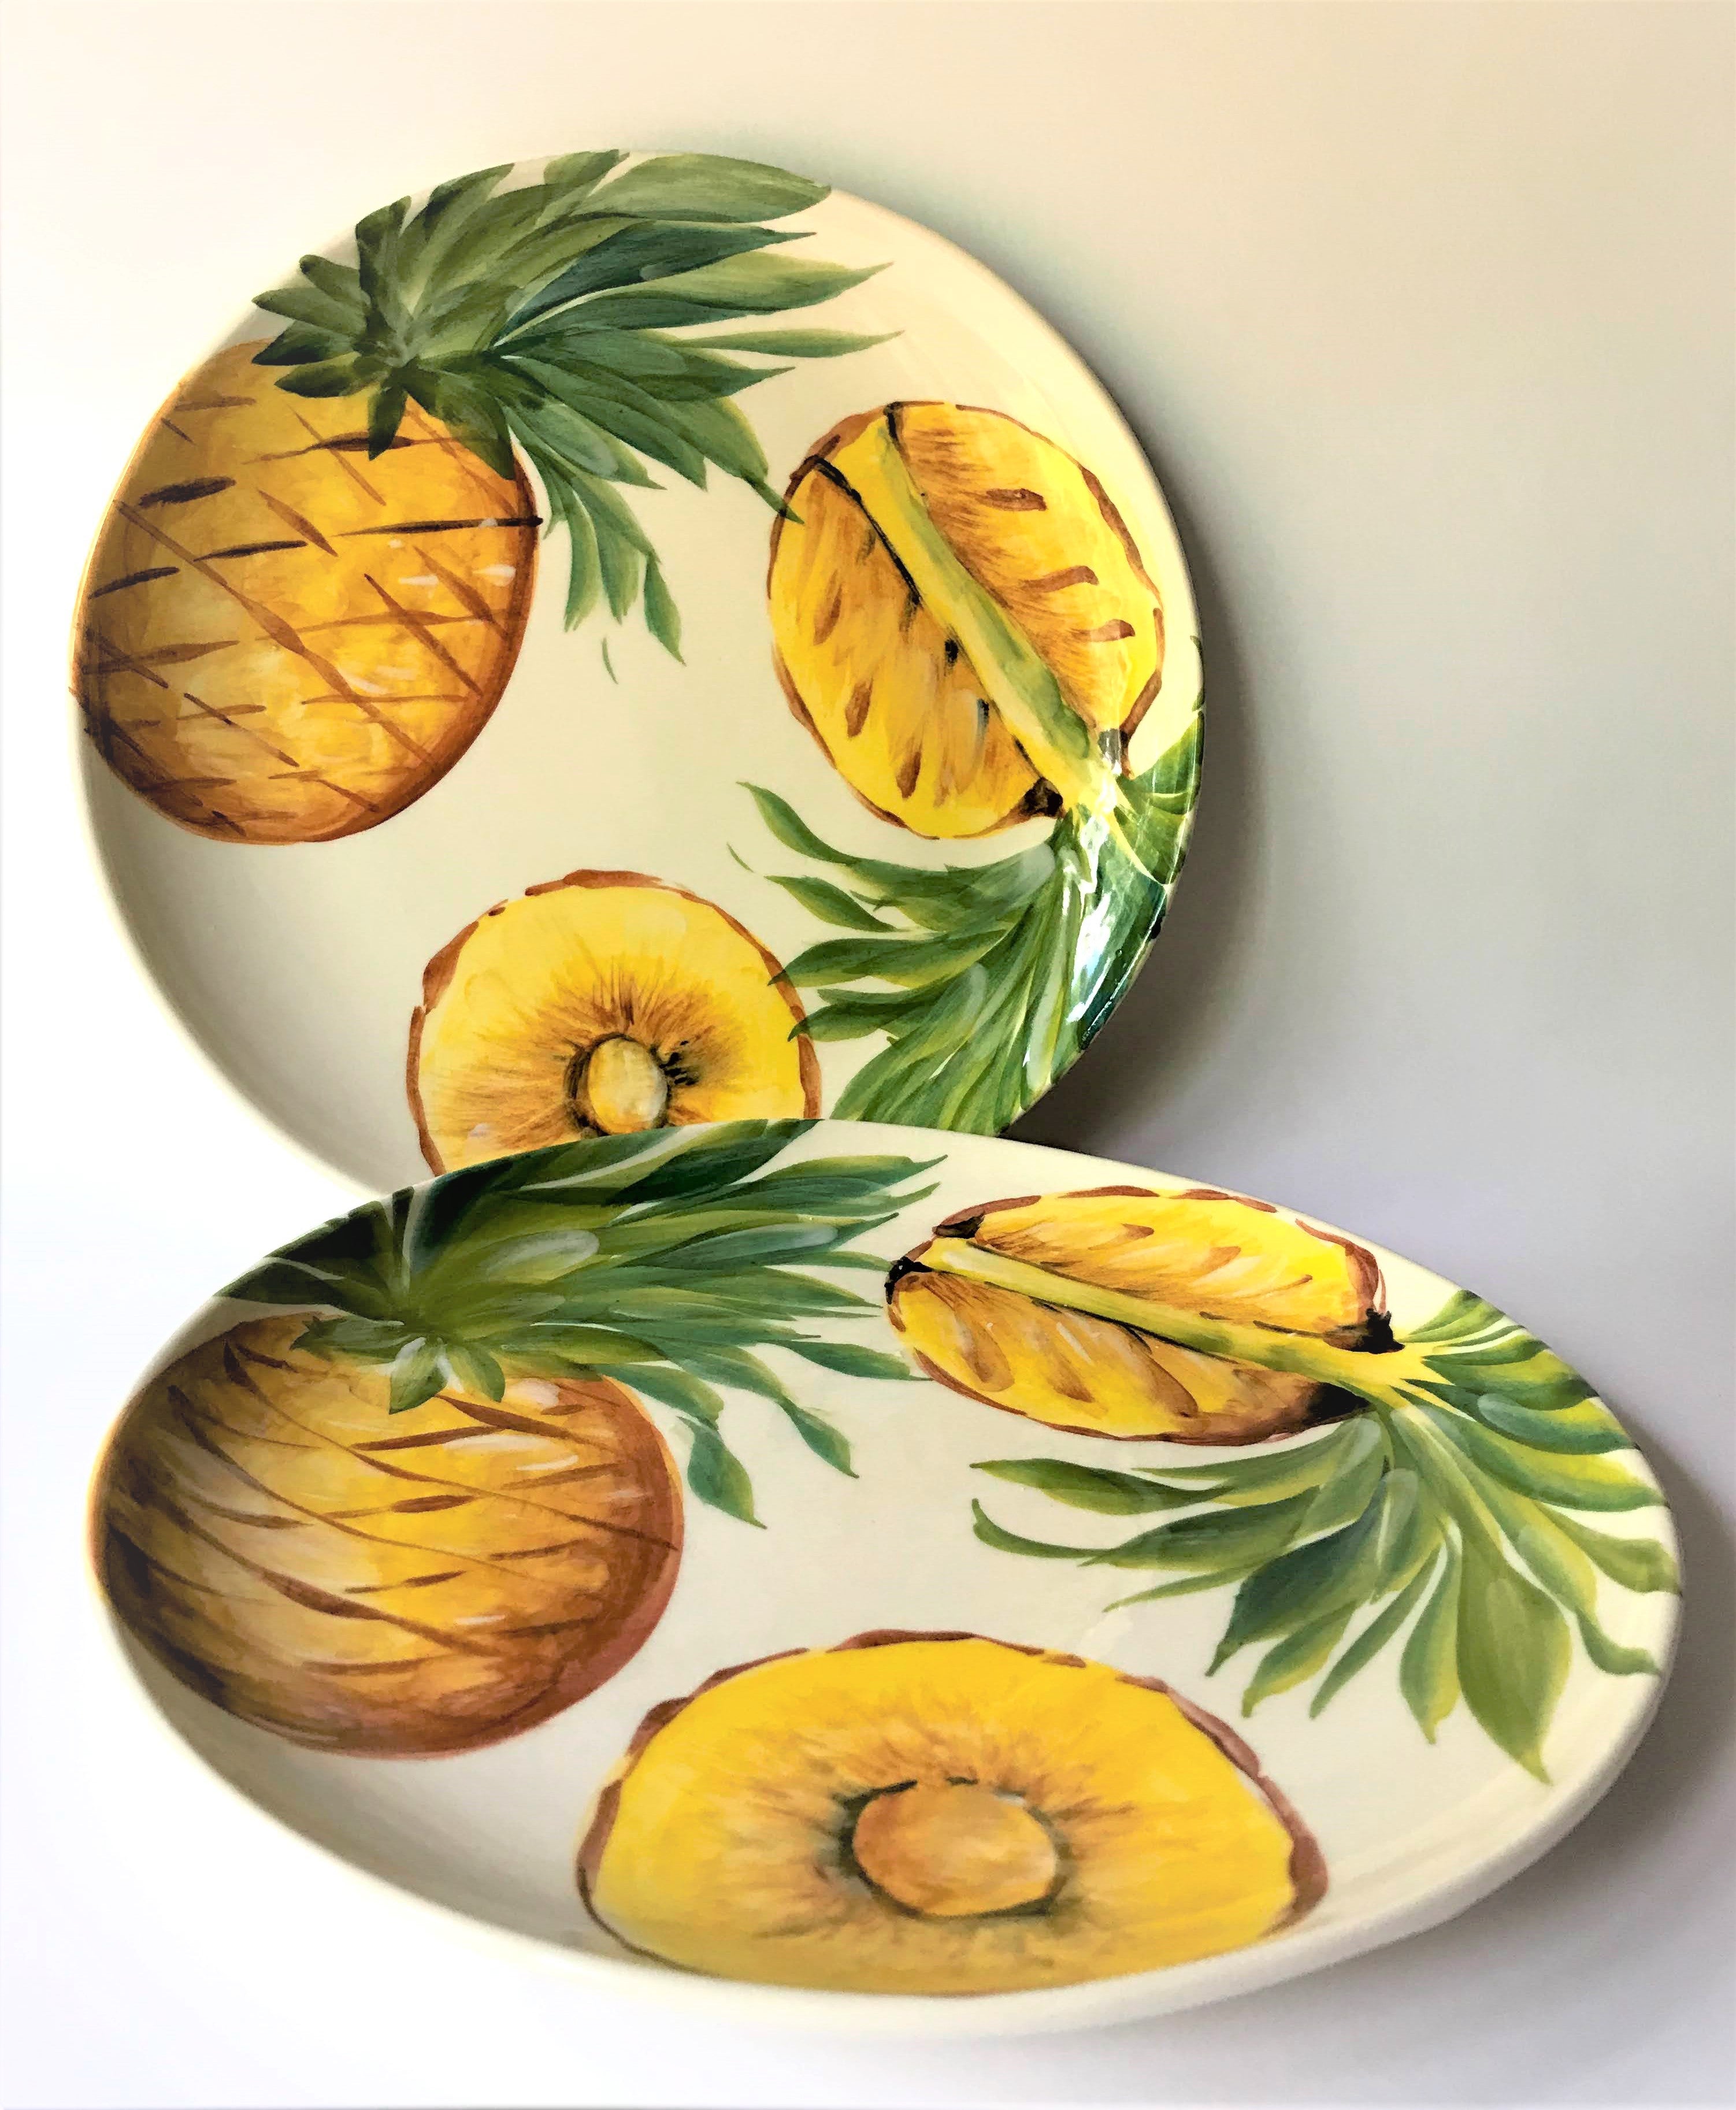 Pineapple Plates